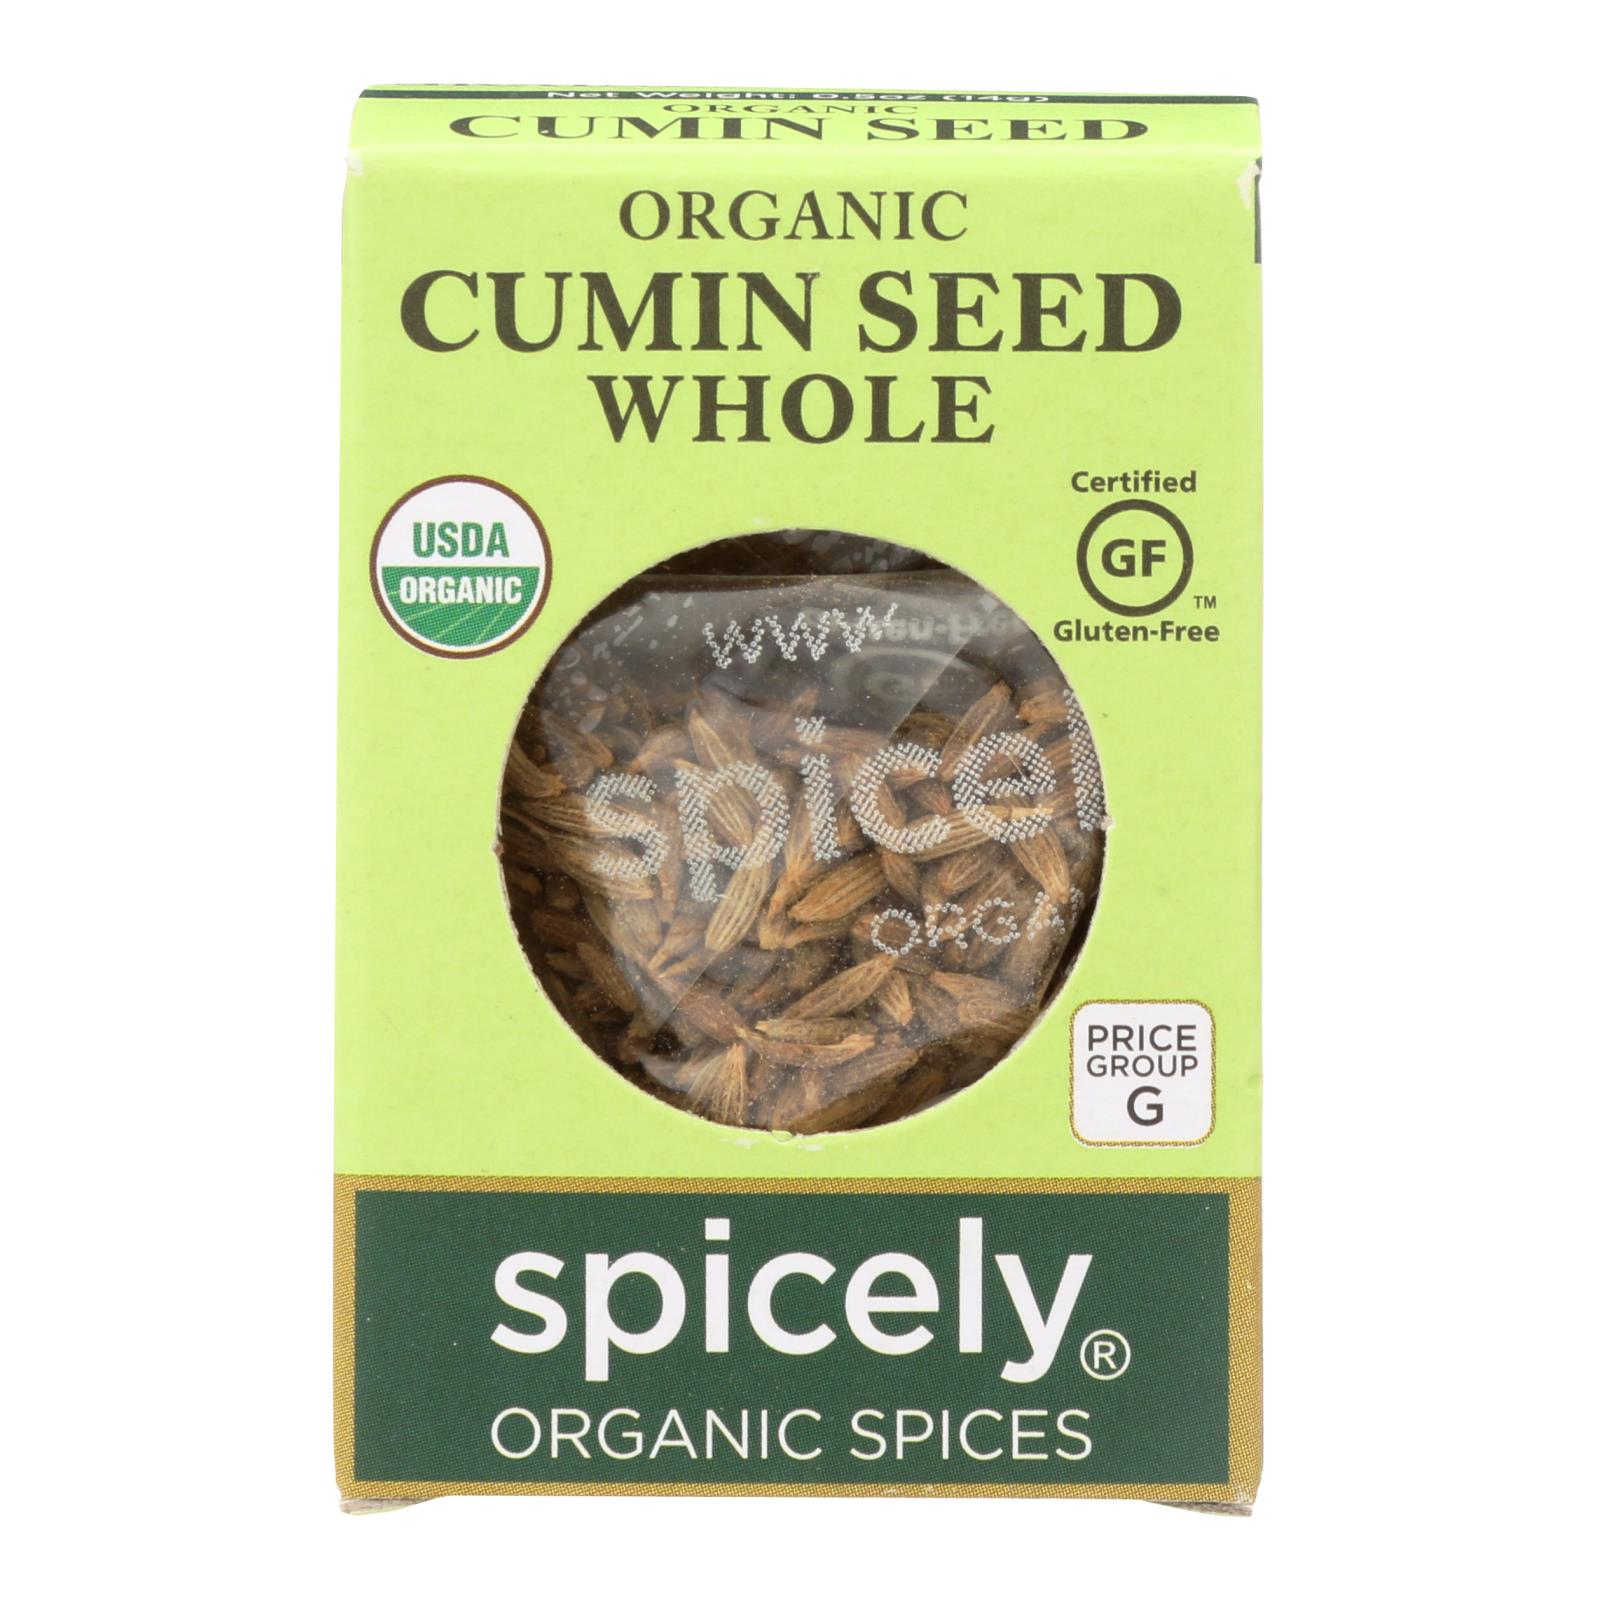 Spicely Organics - Organic Cumin Seed - Whole - 6개 묶음상품 - 0.5 oz.